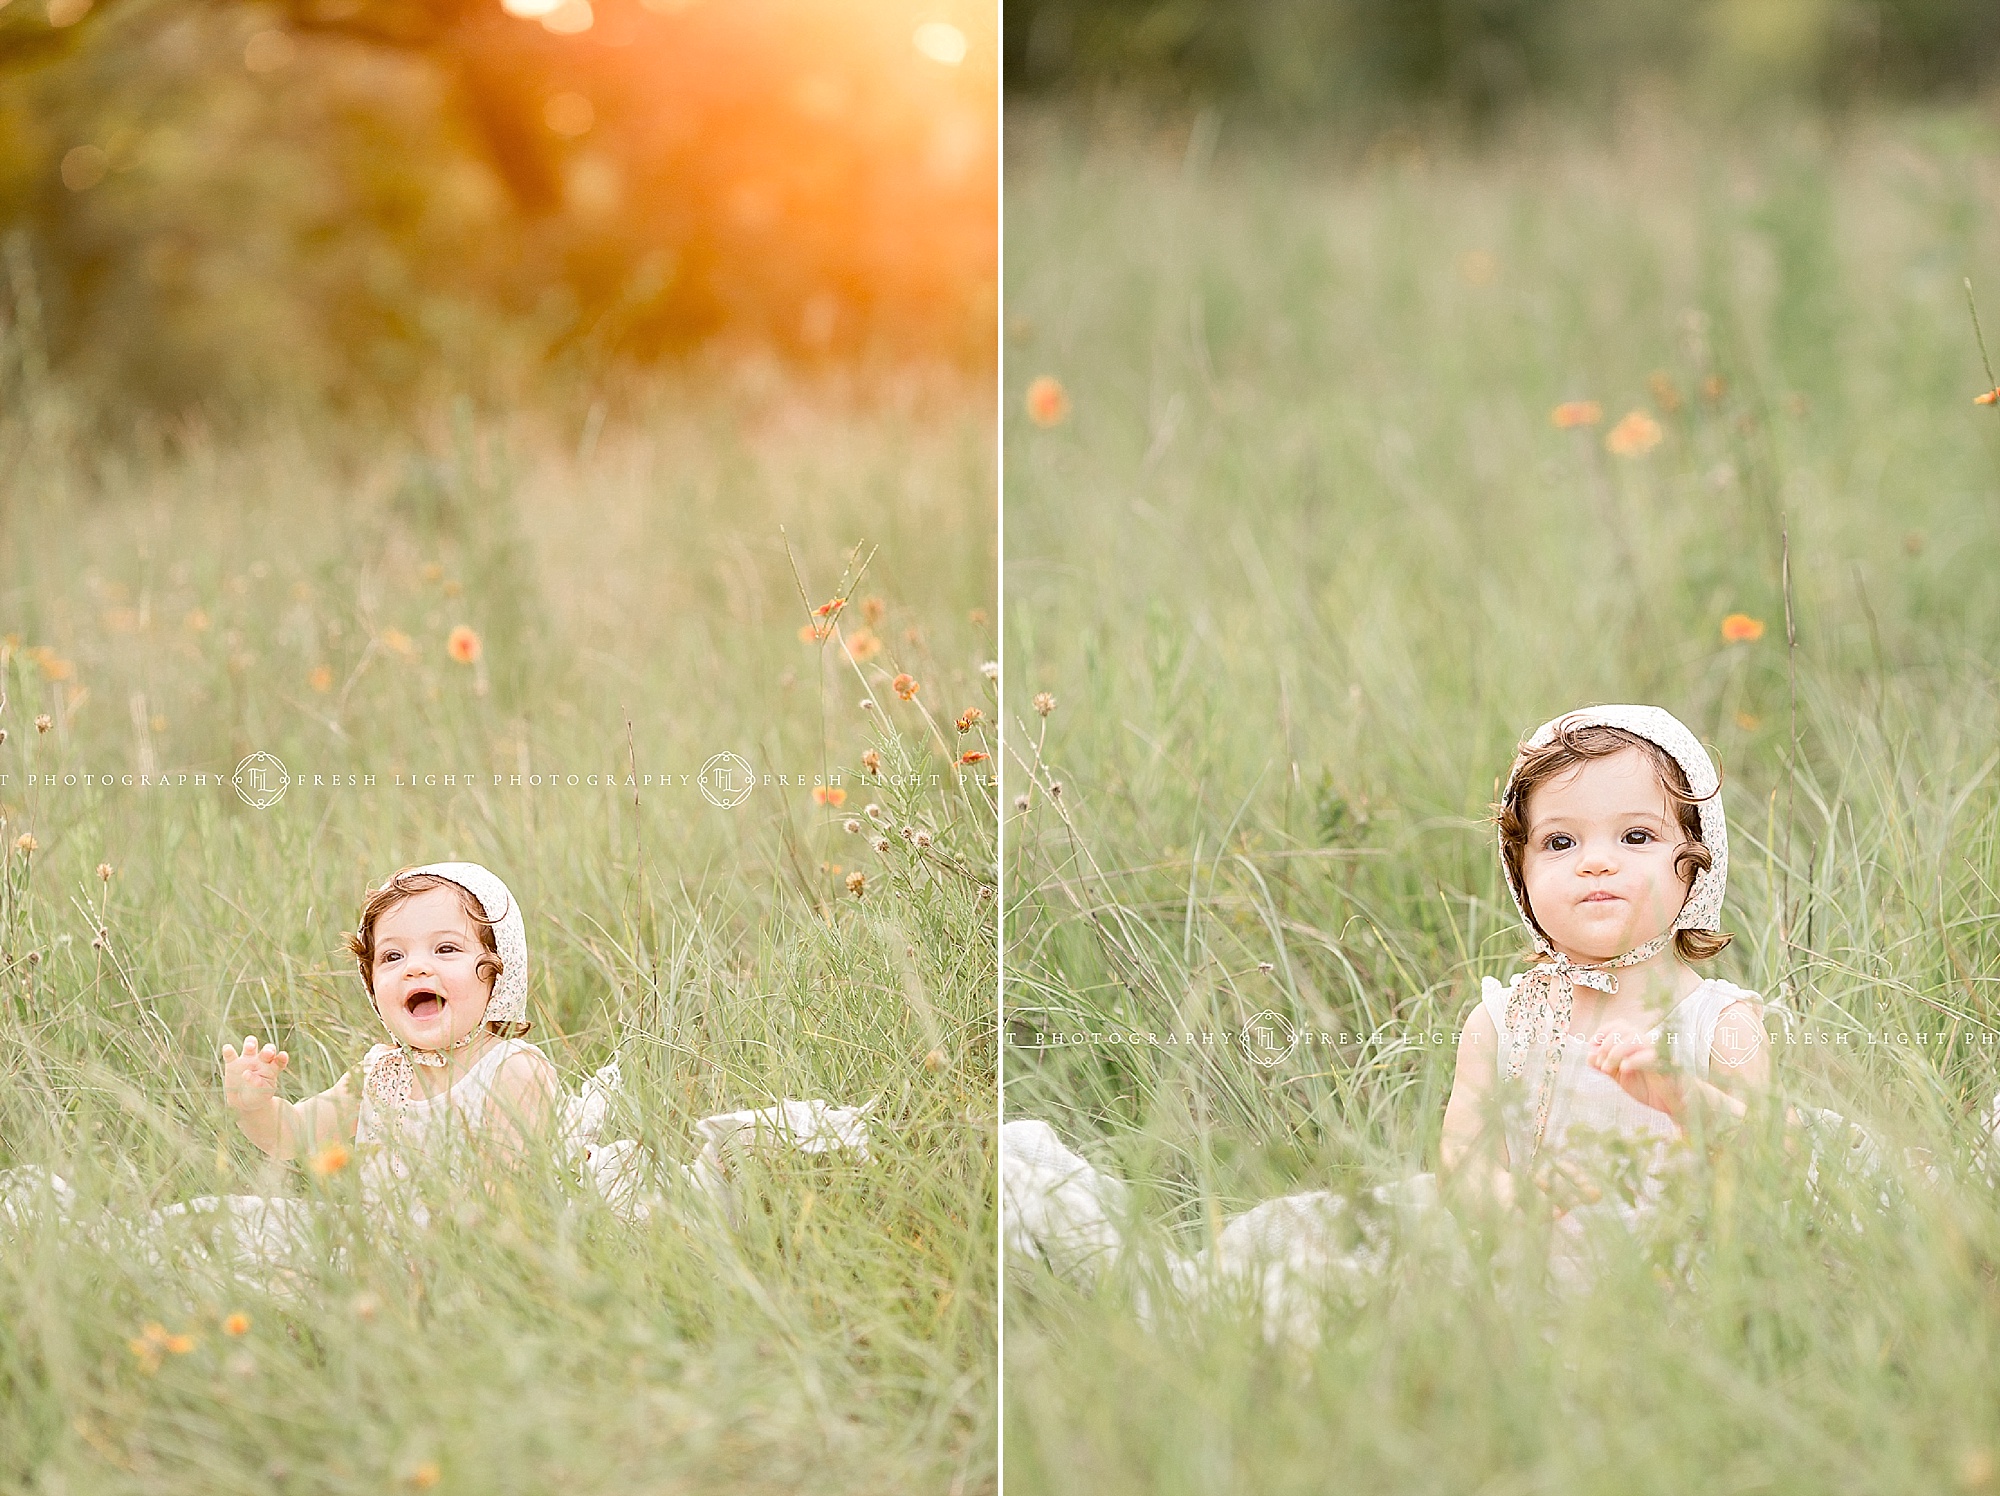 Infant girl in field